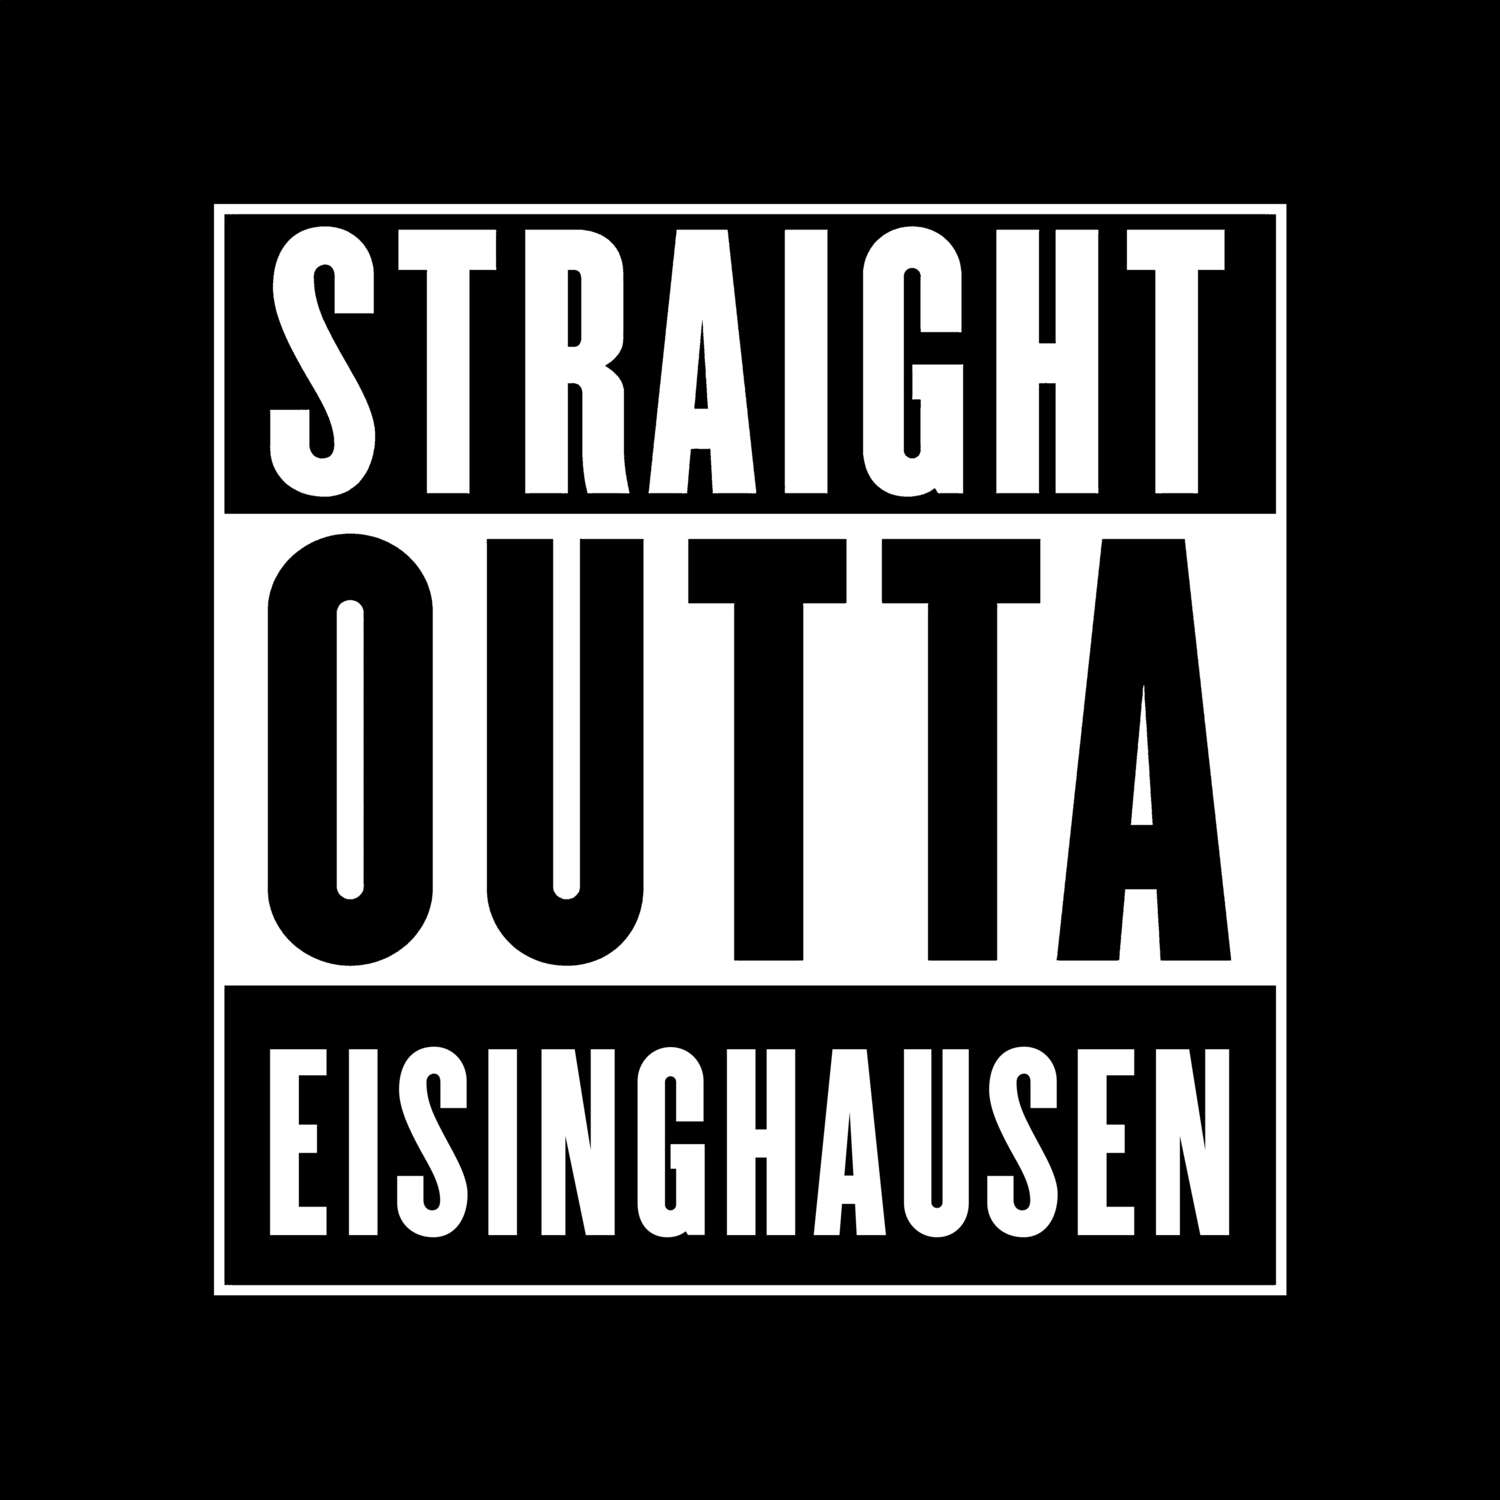 Eisinghausen T-Shirt »Straight Outta«